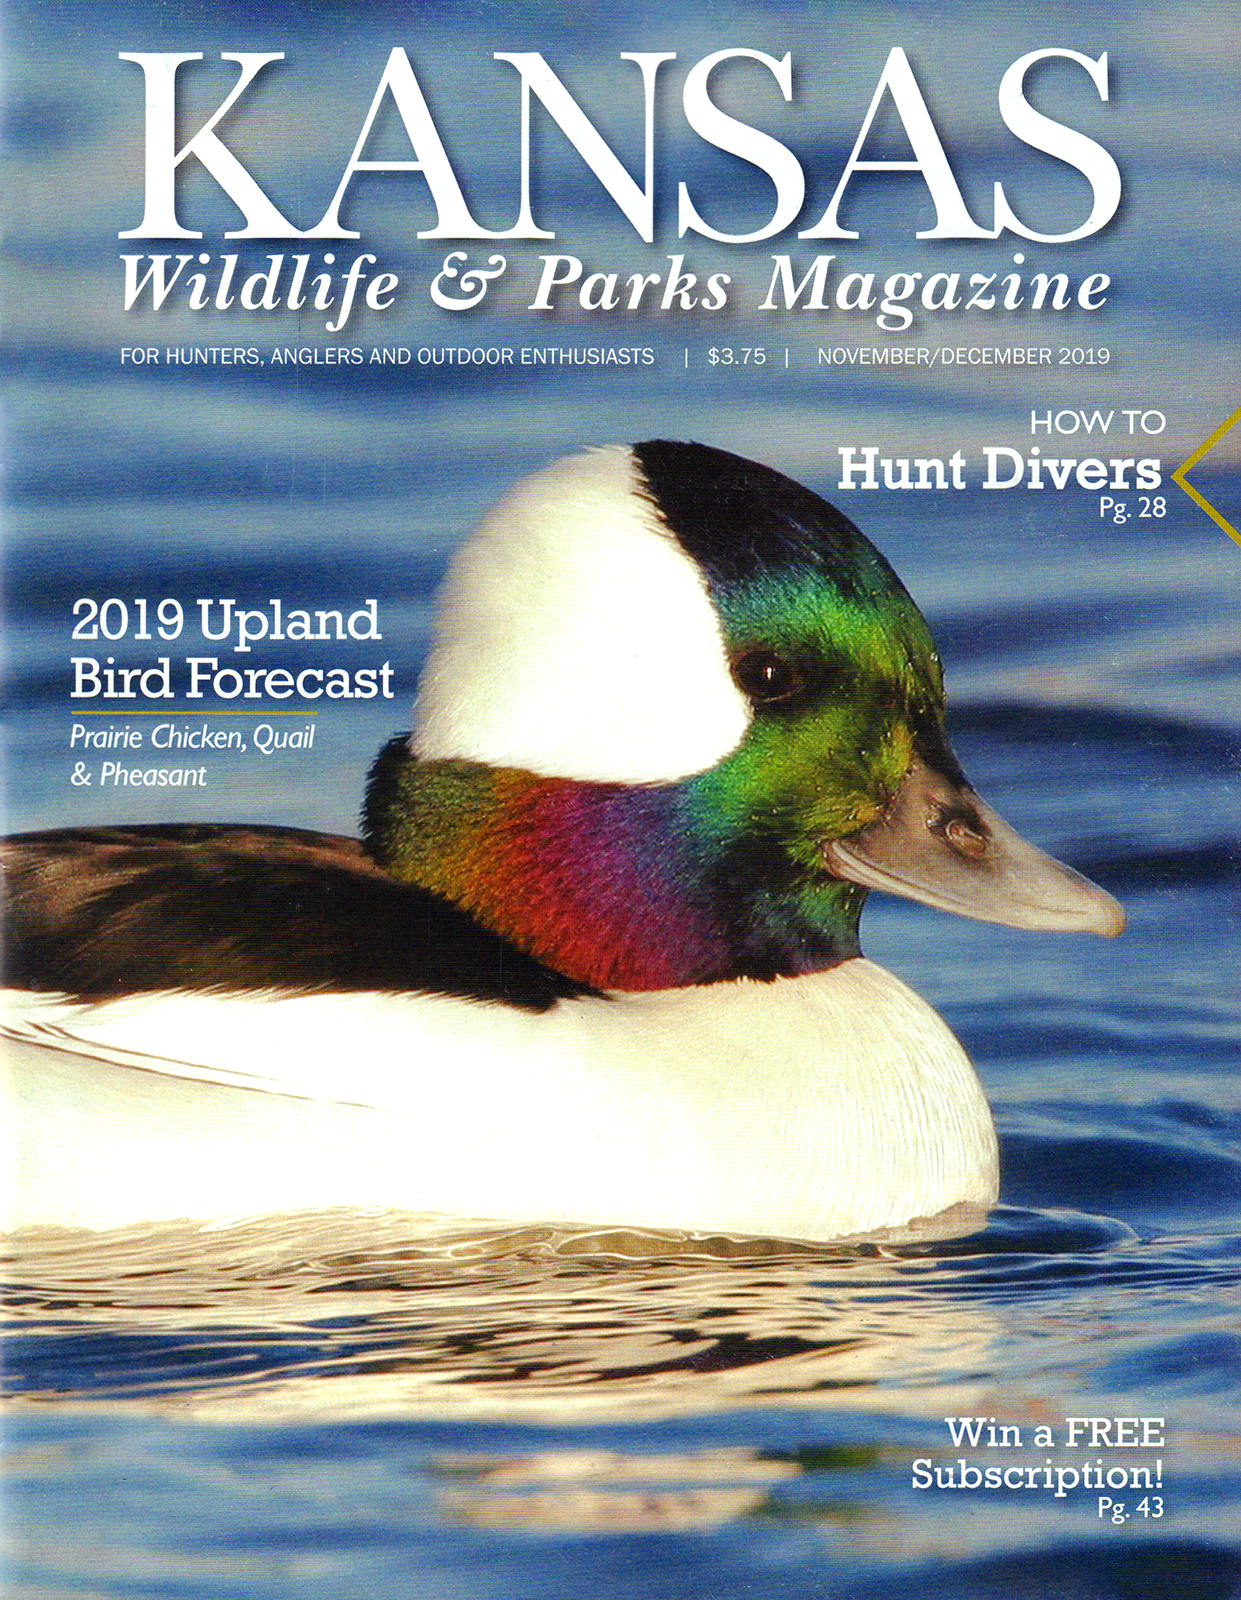 Best Price for Kansas Wildlife & Parks Magazine Subscription